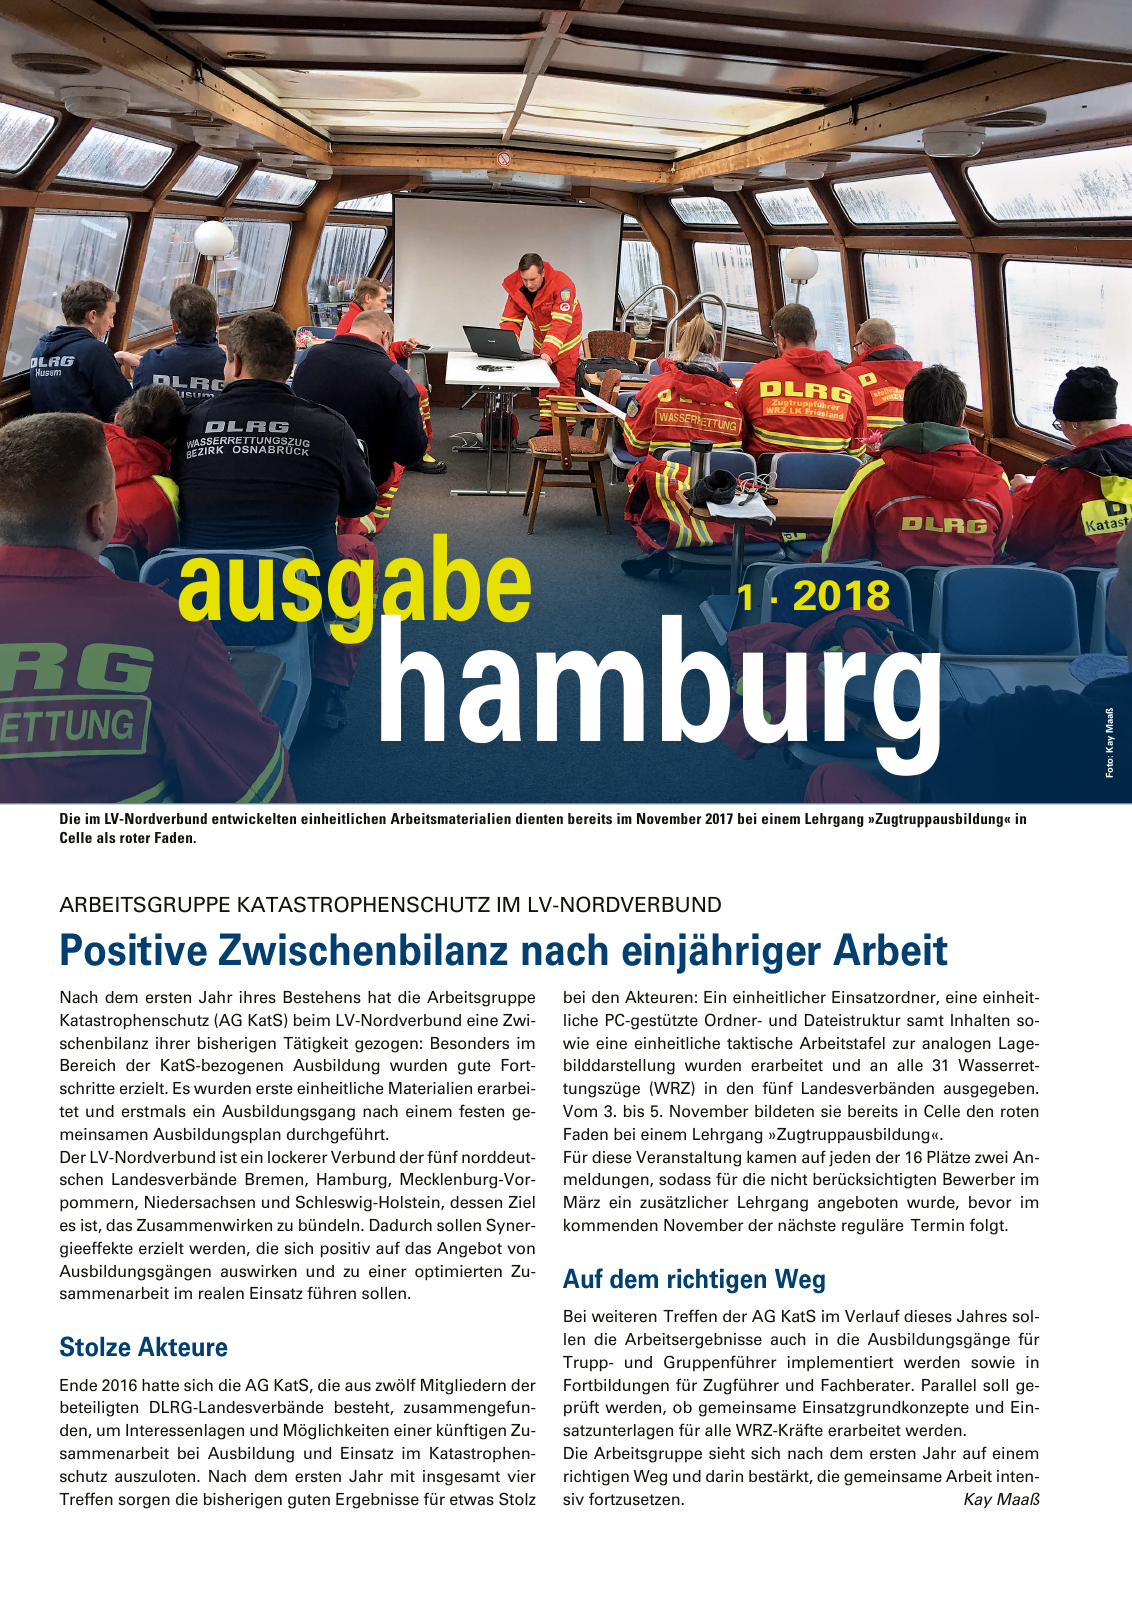 Vorschau Lebensretter 1/2018 - Regionalausgabe Hamburg Seite 3